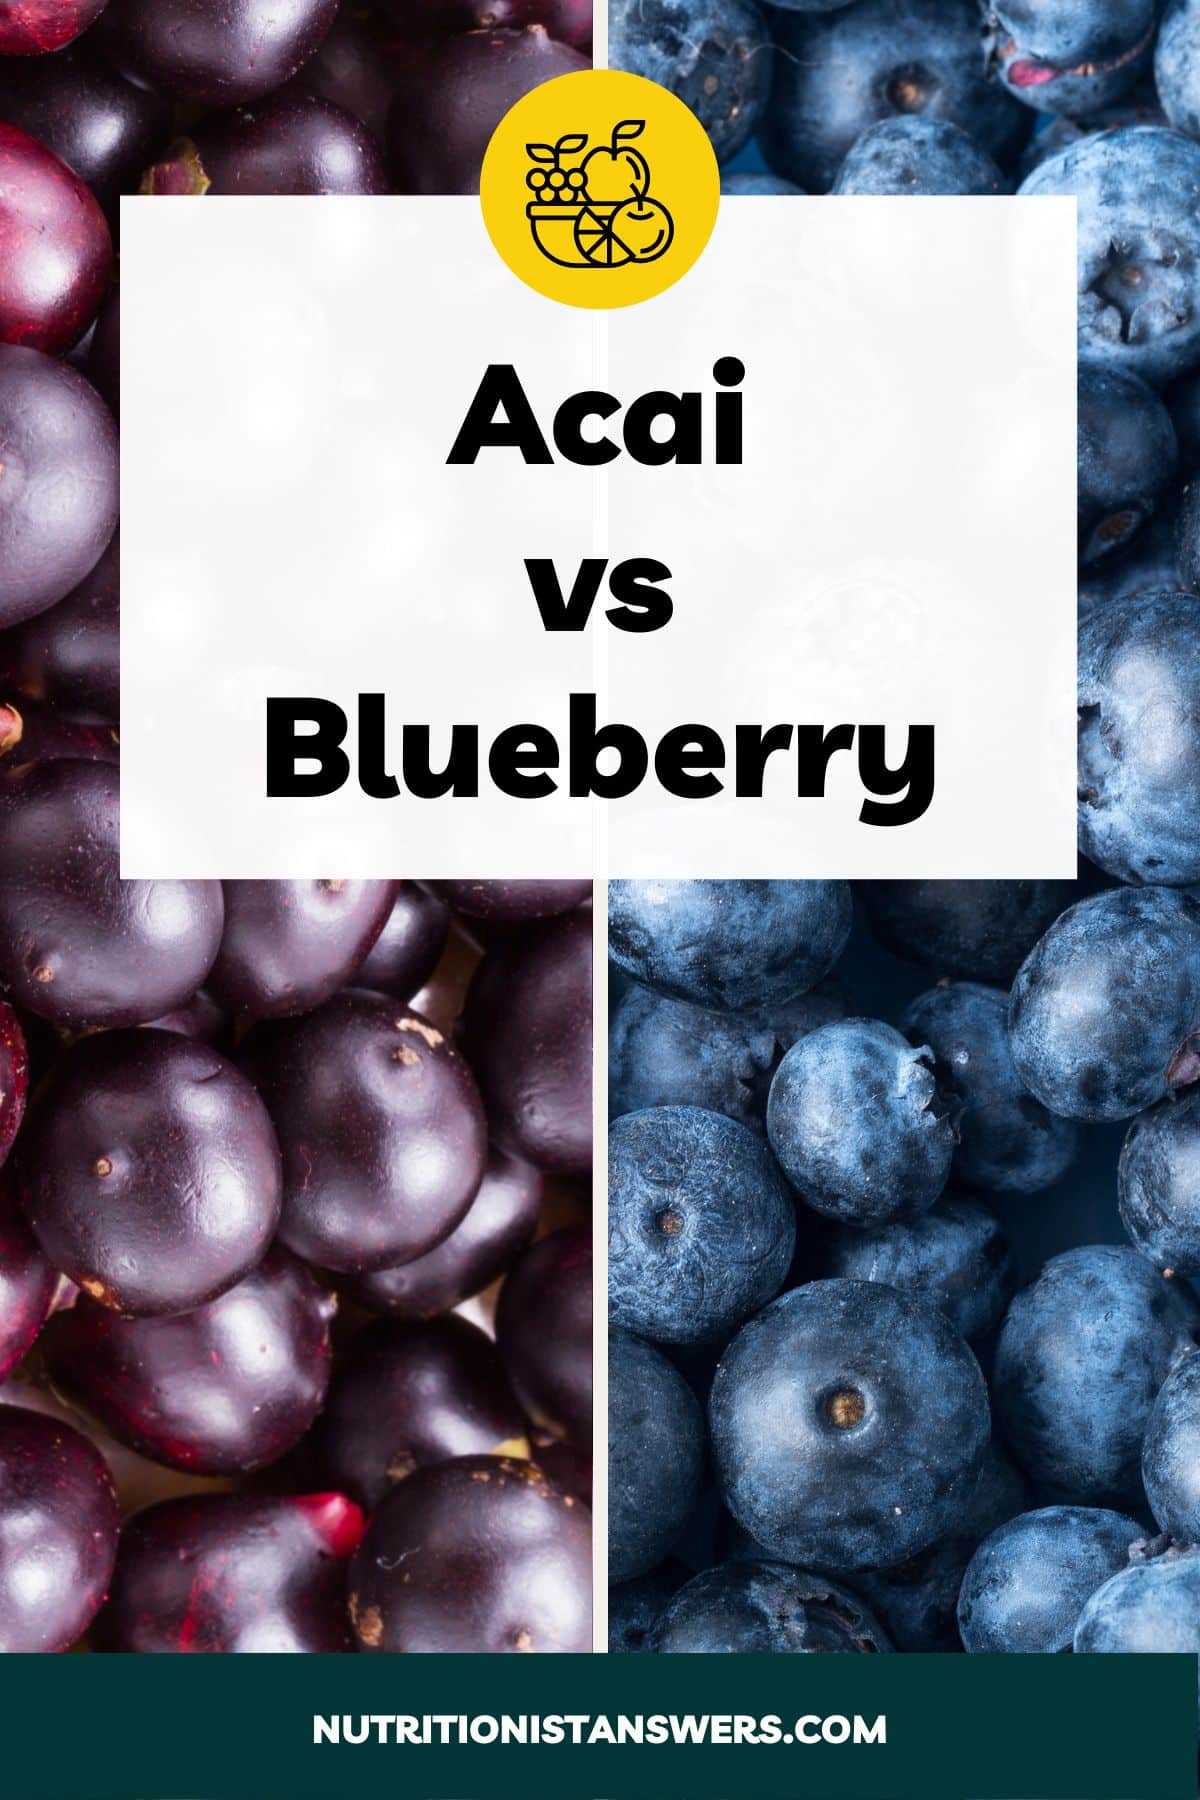 Acai vs Blueberry